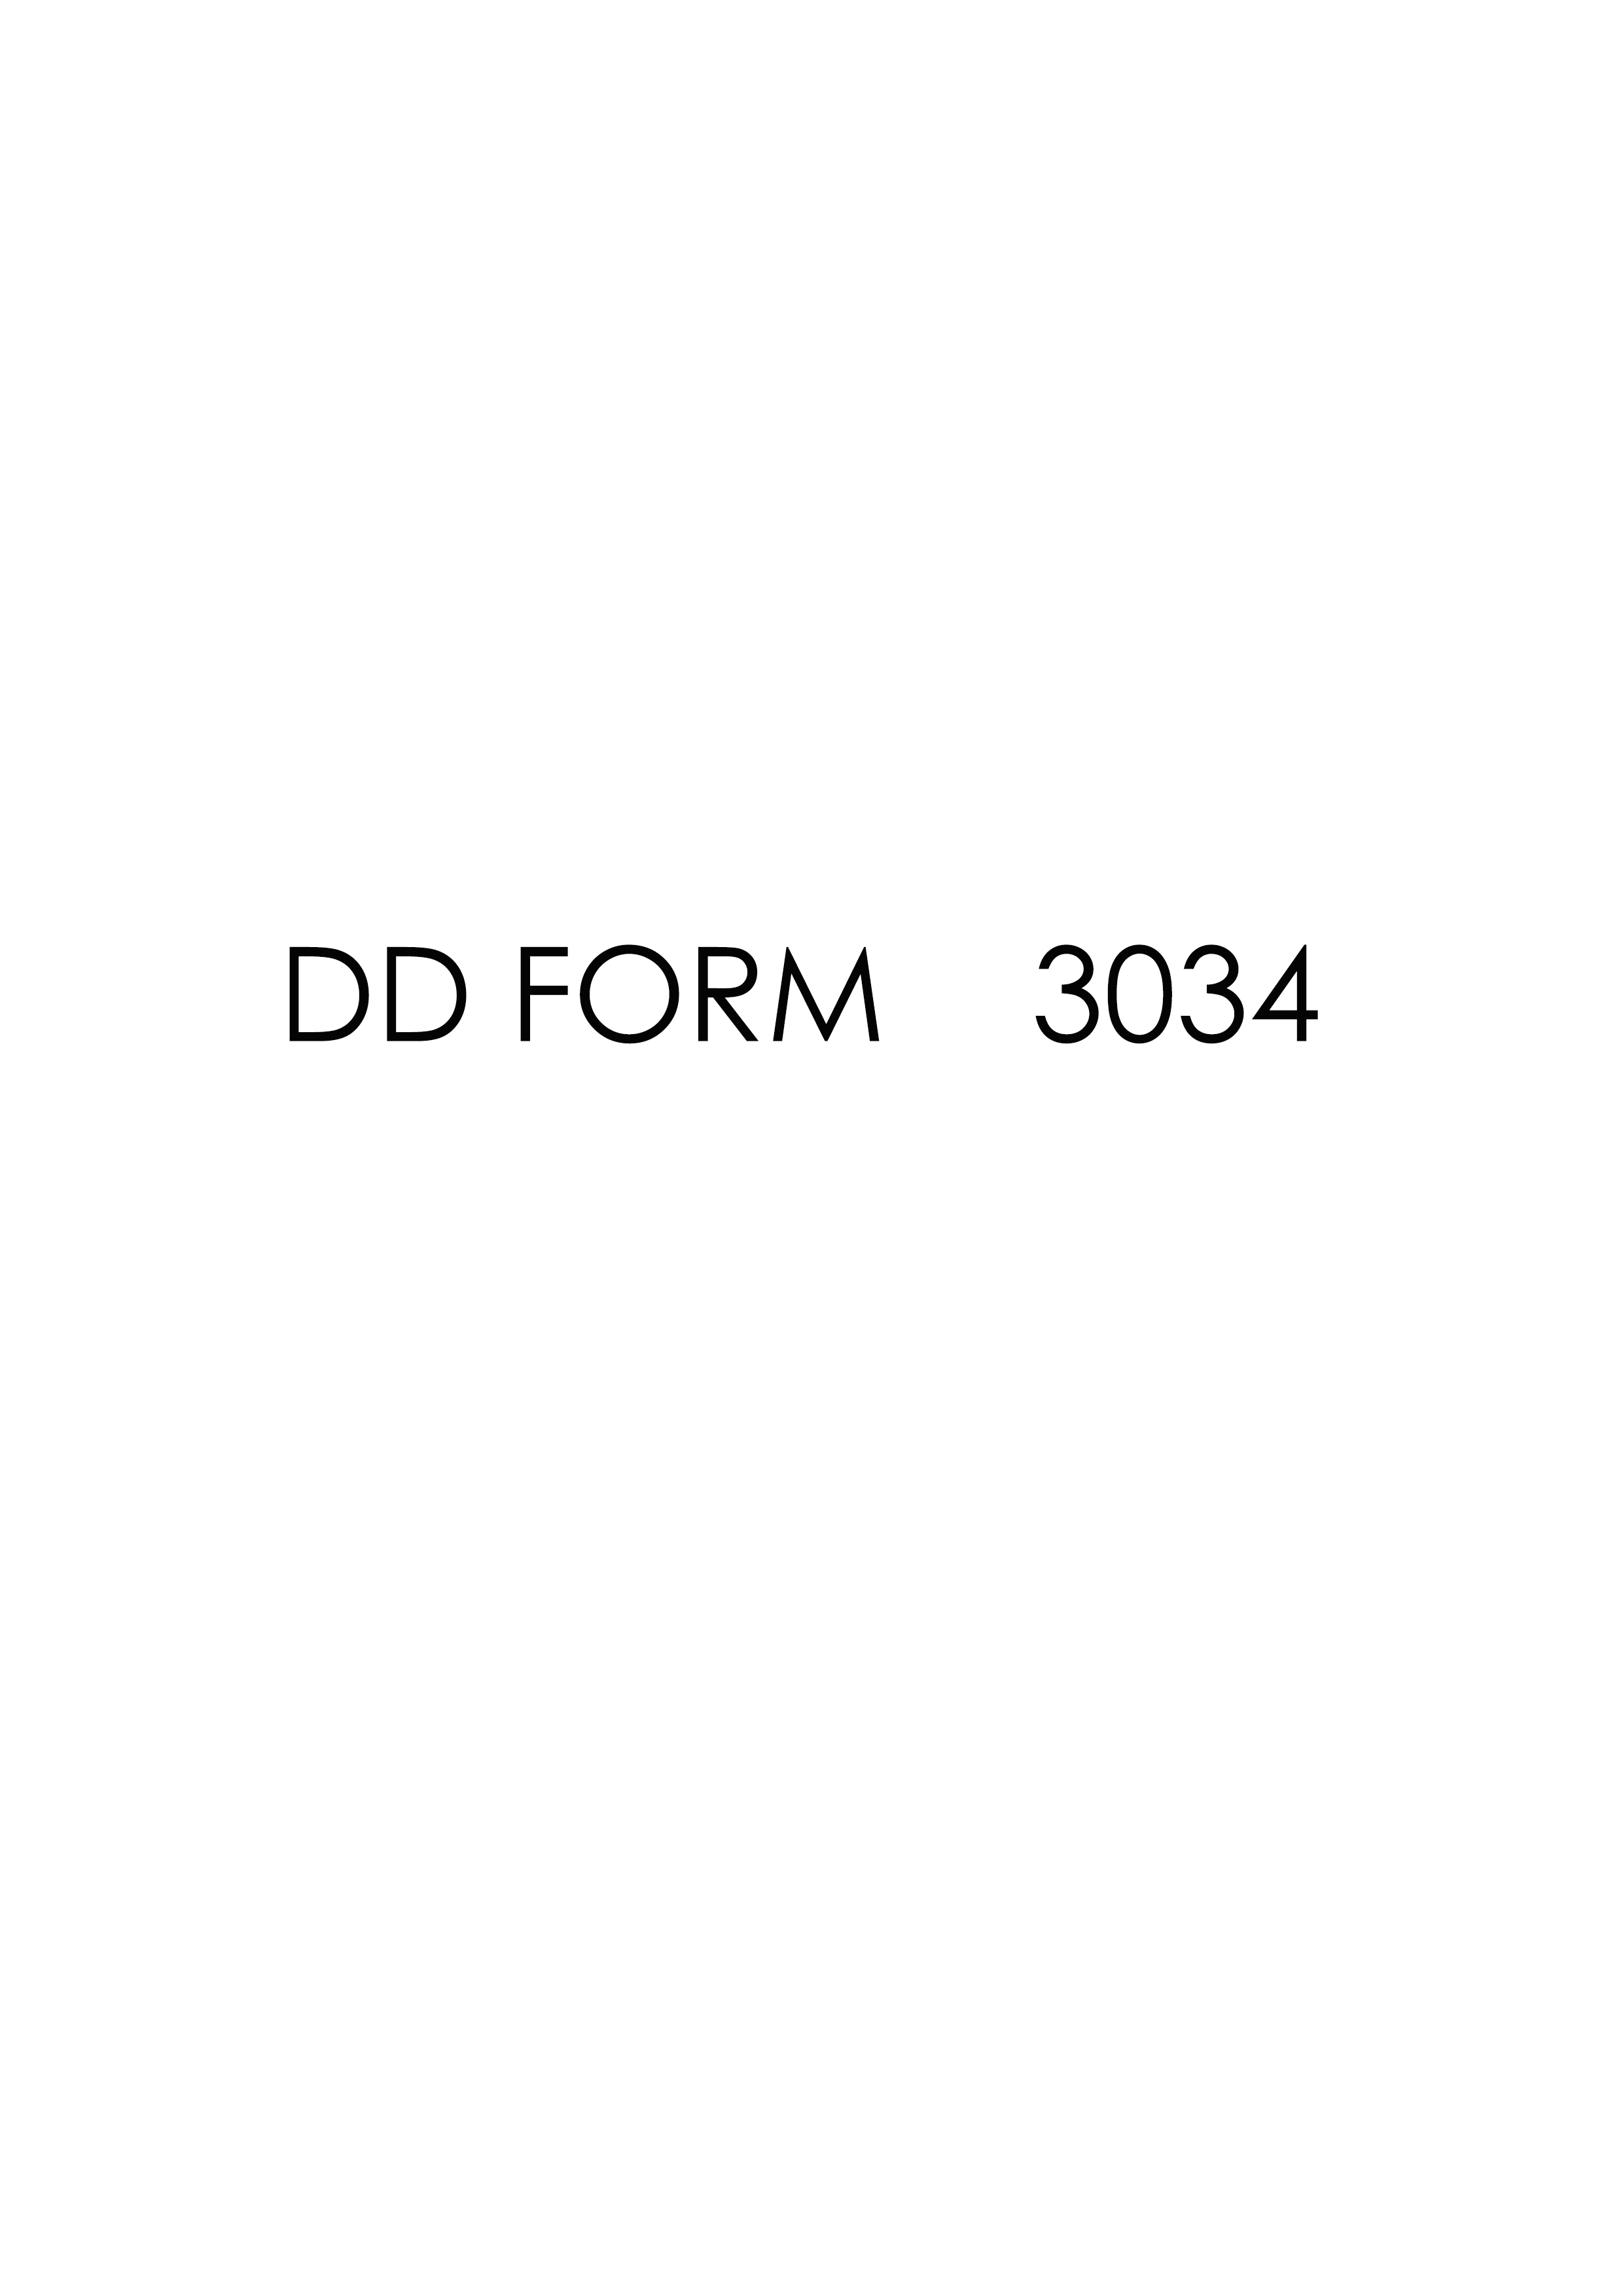 Download dd form 3034